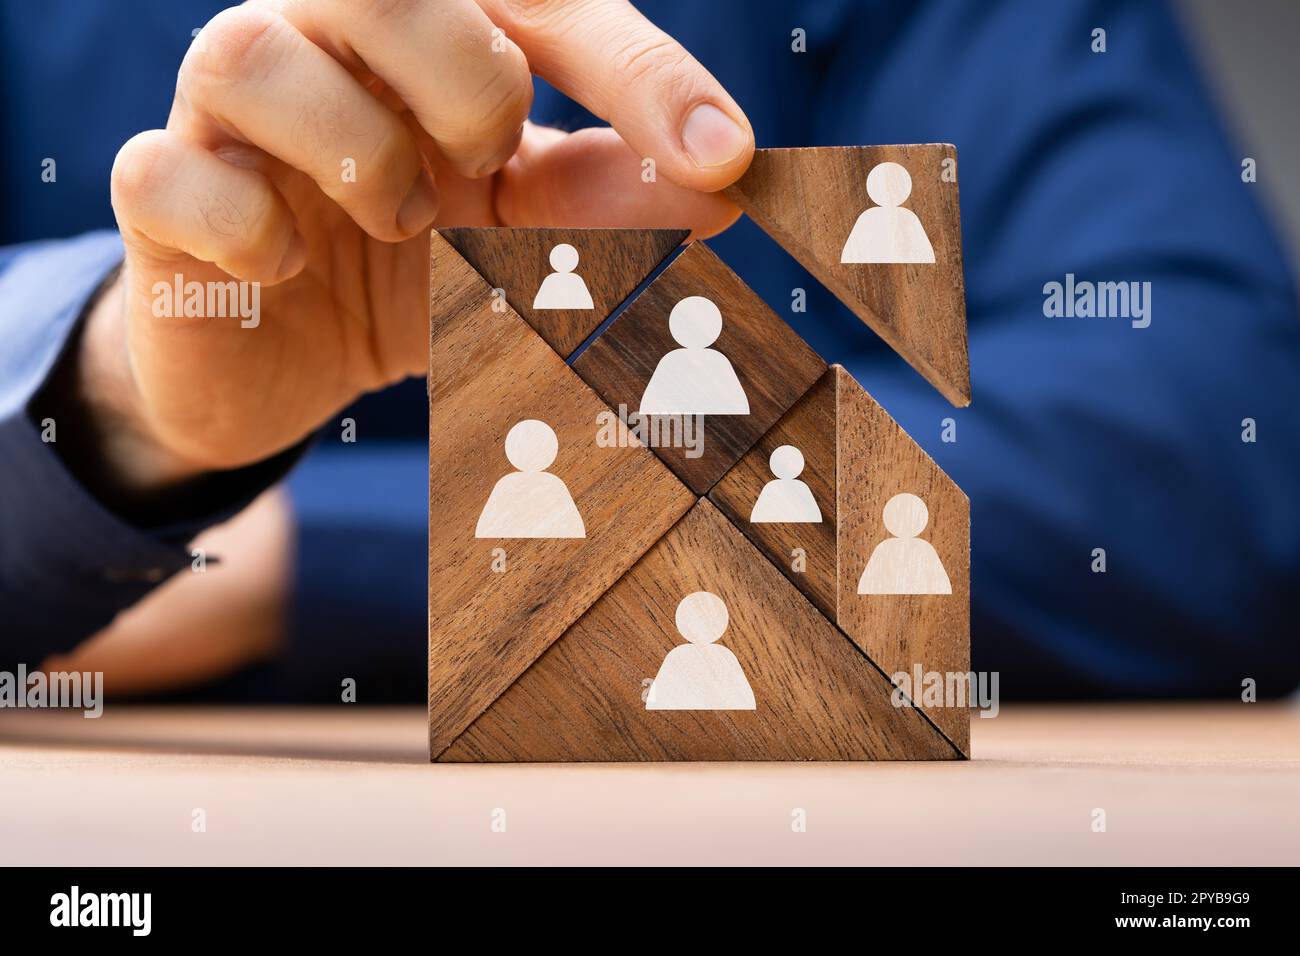 HR Recruitment Hand Making Tangram Puzzle Stock Photo